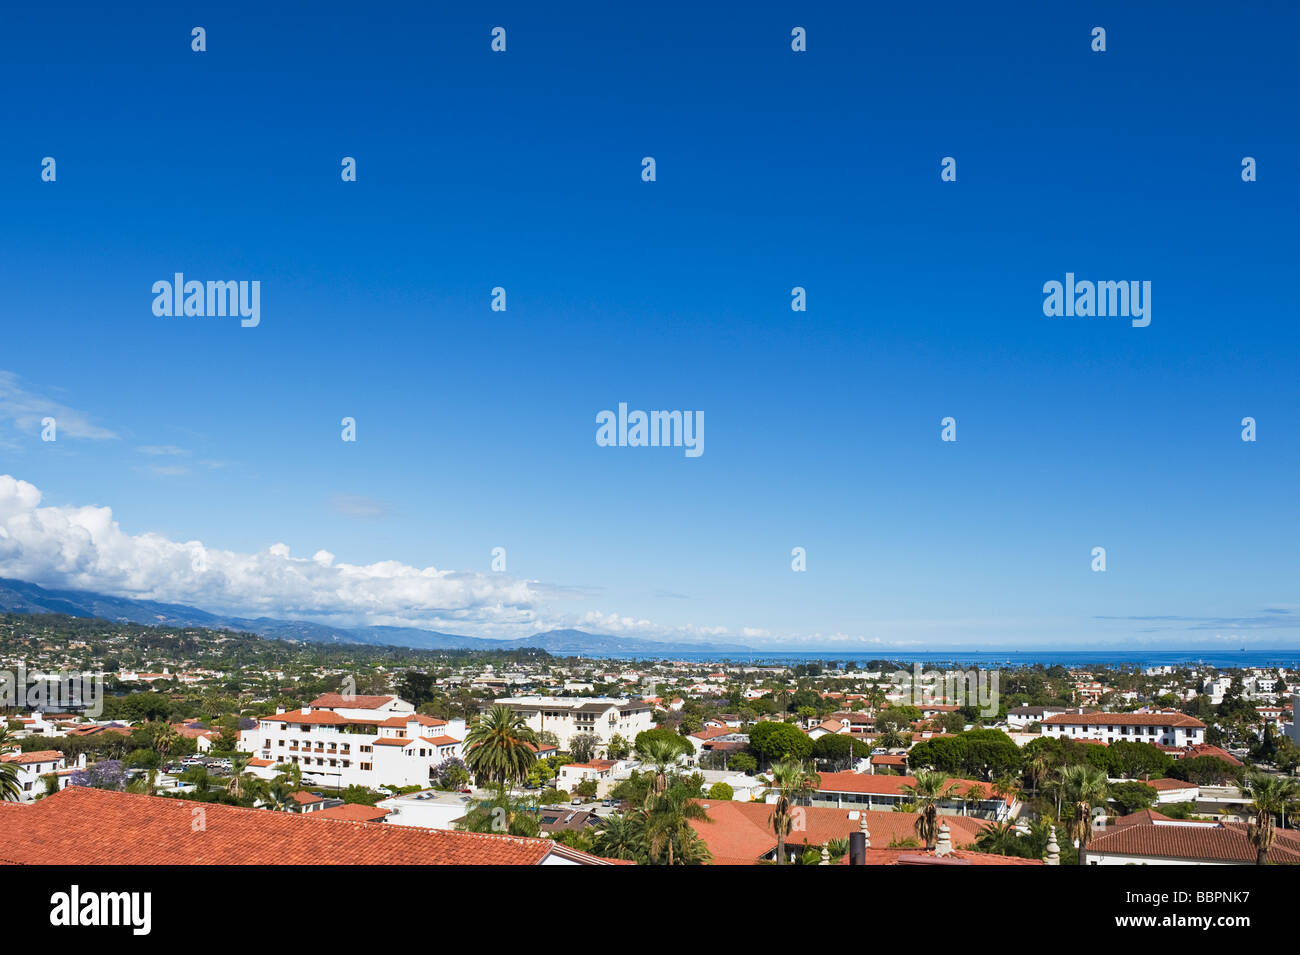 View across downtown Santa Barbara from courthouse towe,r Santa Barbara, California Stock Photo